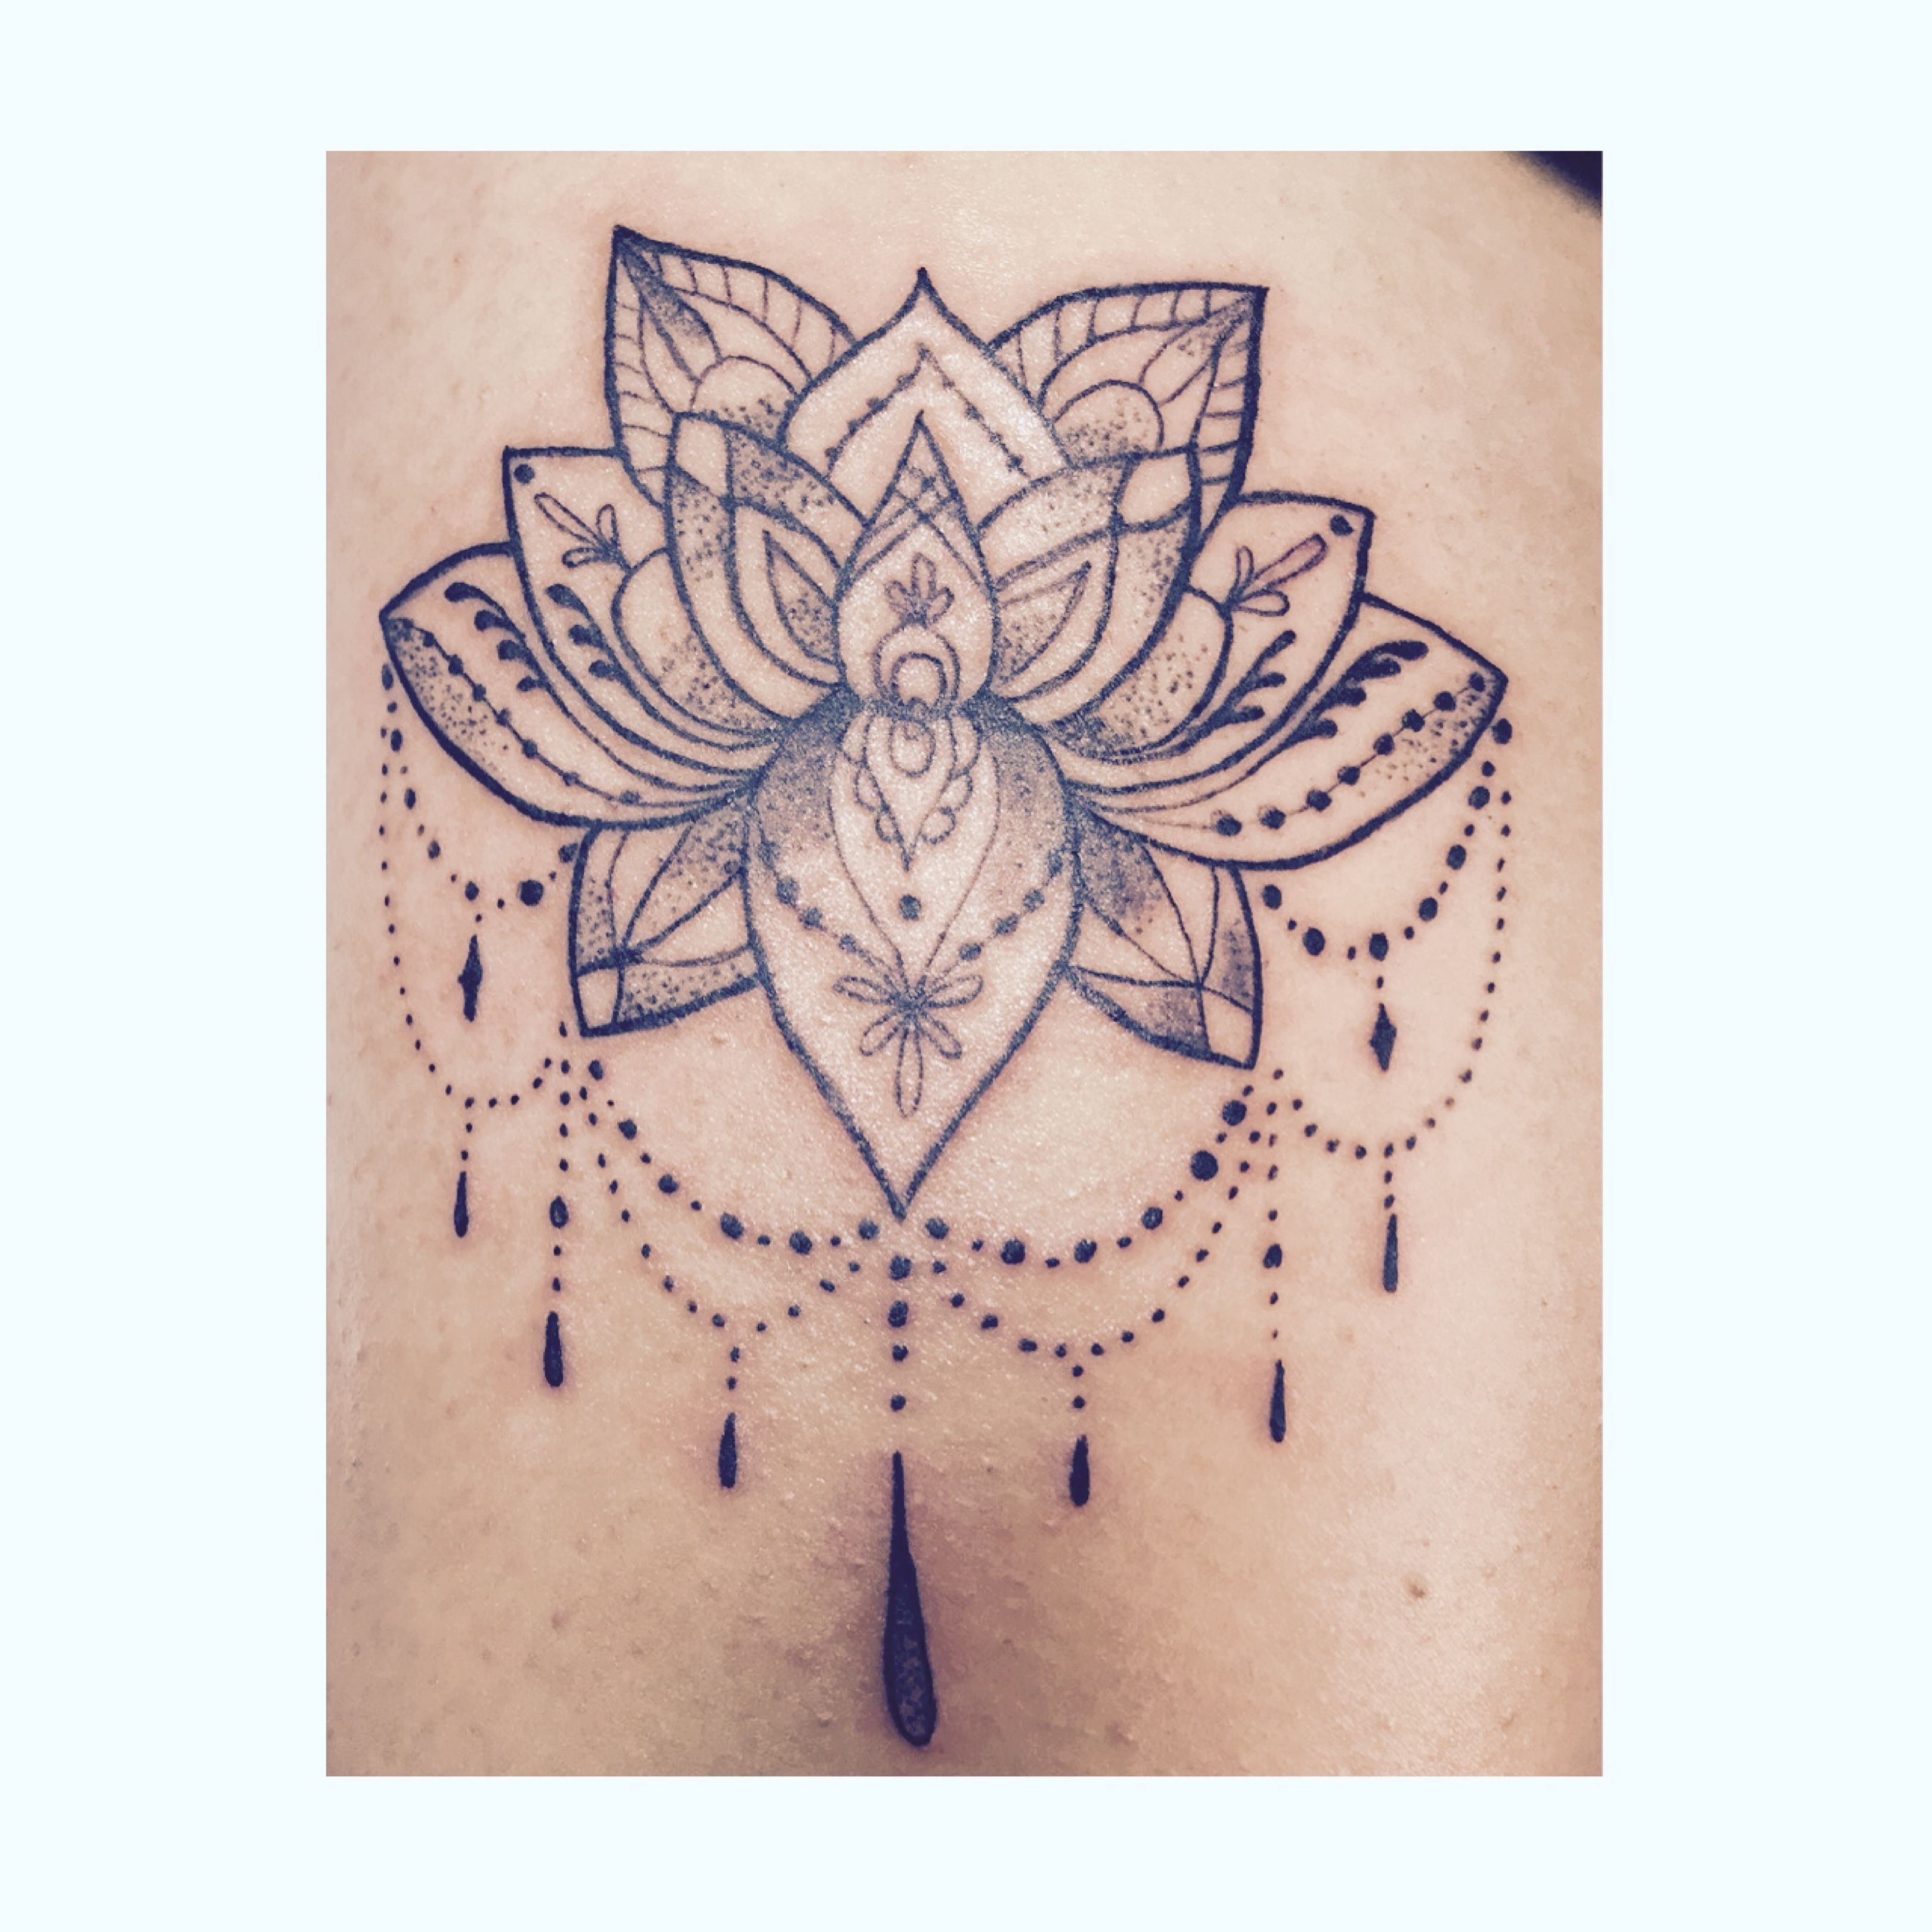 Tattoo uploaded by @Royce_80sbaby • Mandala thigh tattoo • Tattoodo